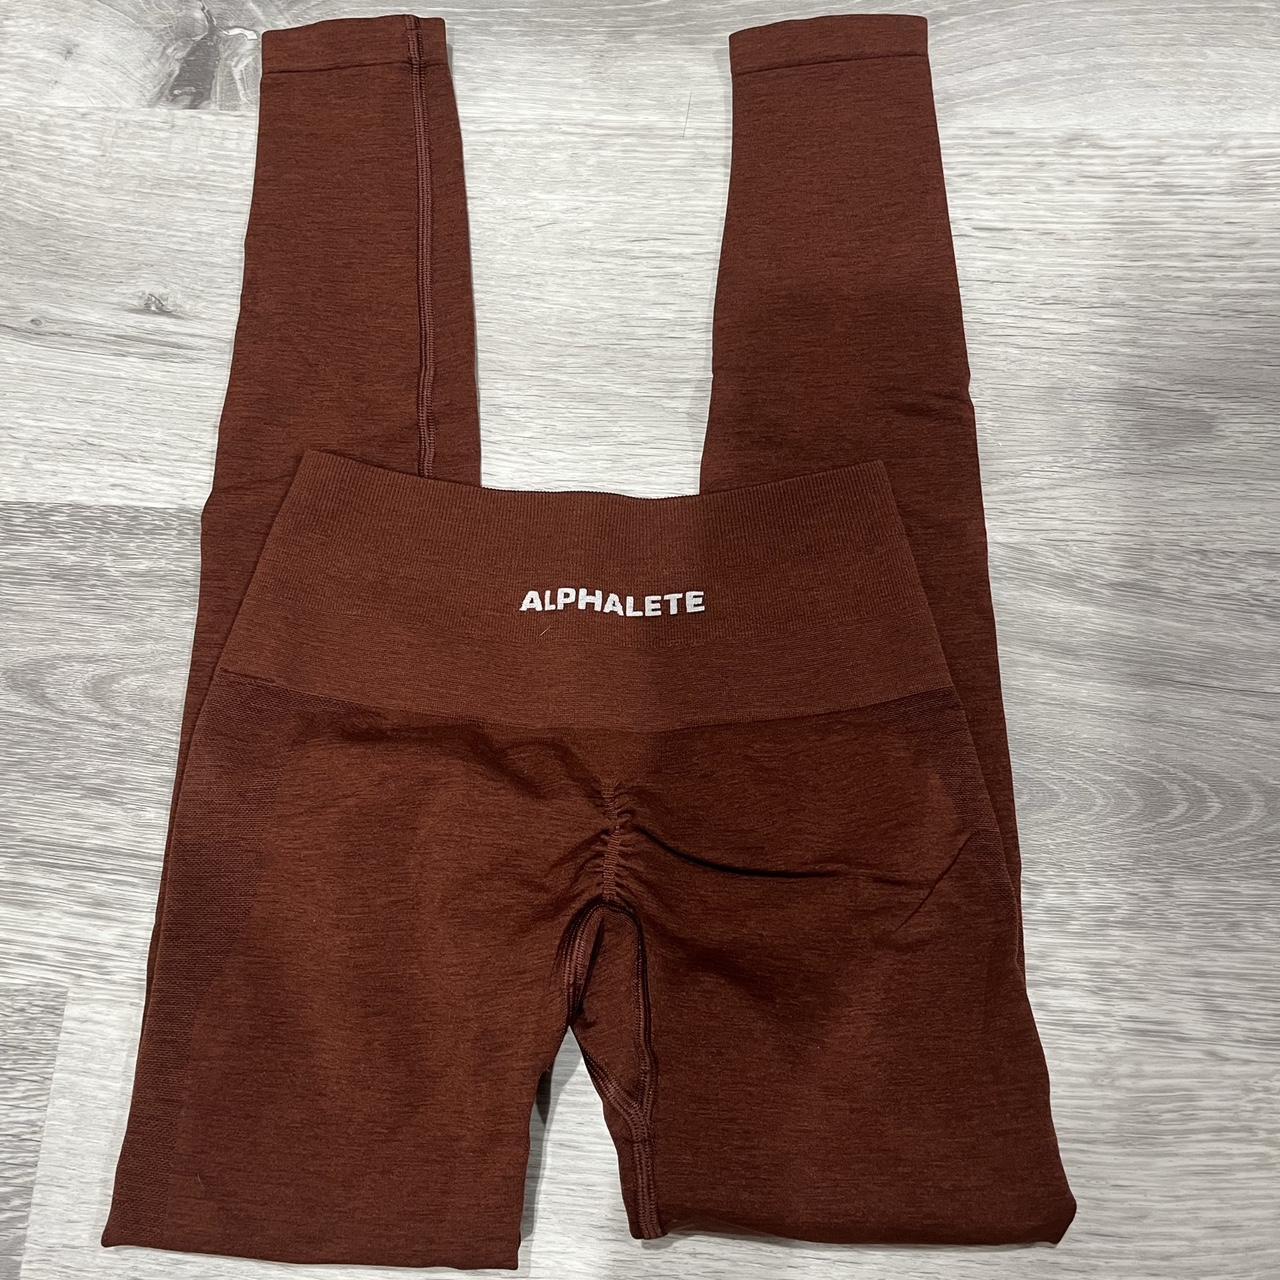 Alphalete amplify shorts, color is mocha. Size - Depop